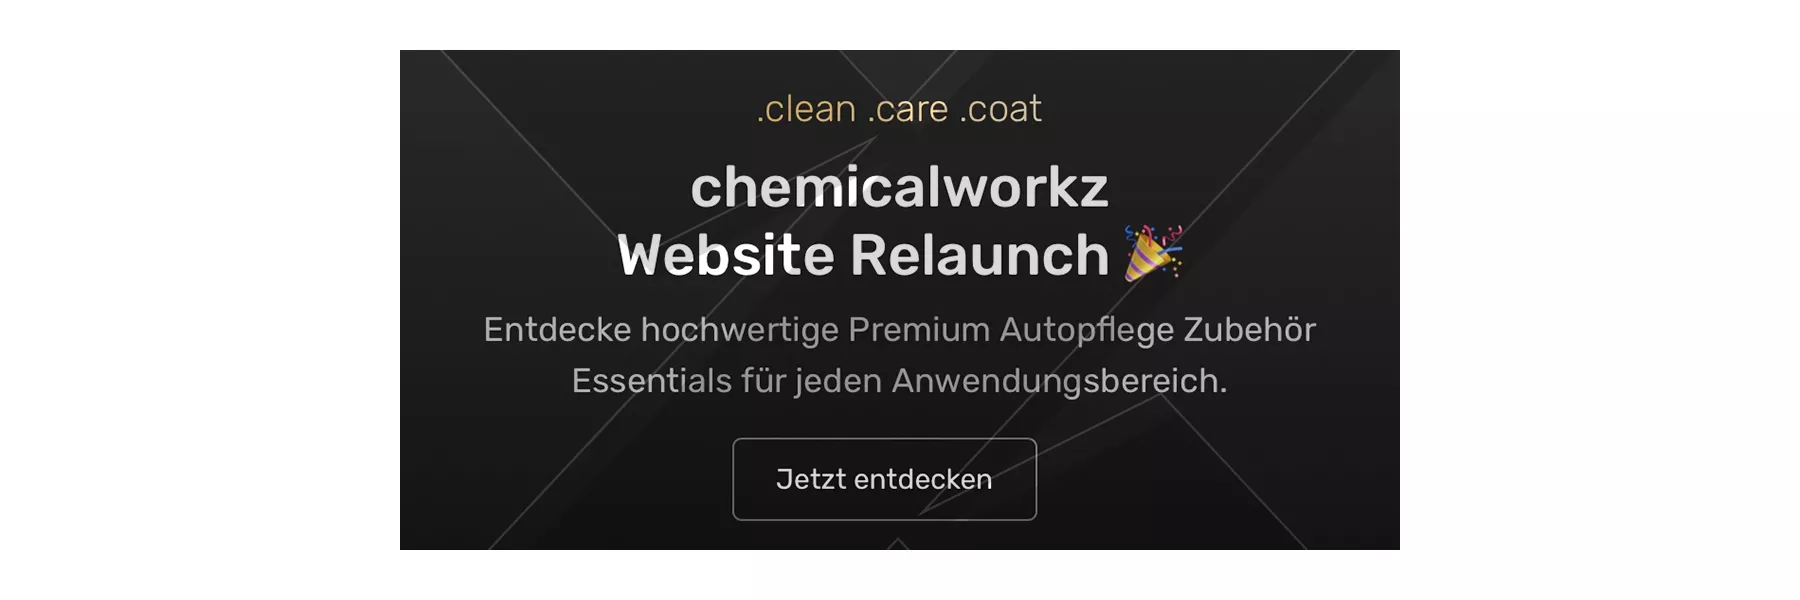 chemicalworkz® enthüllt neue Website - 